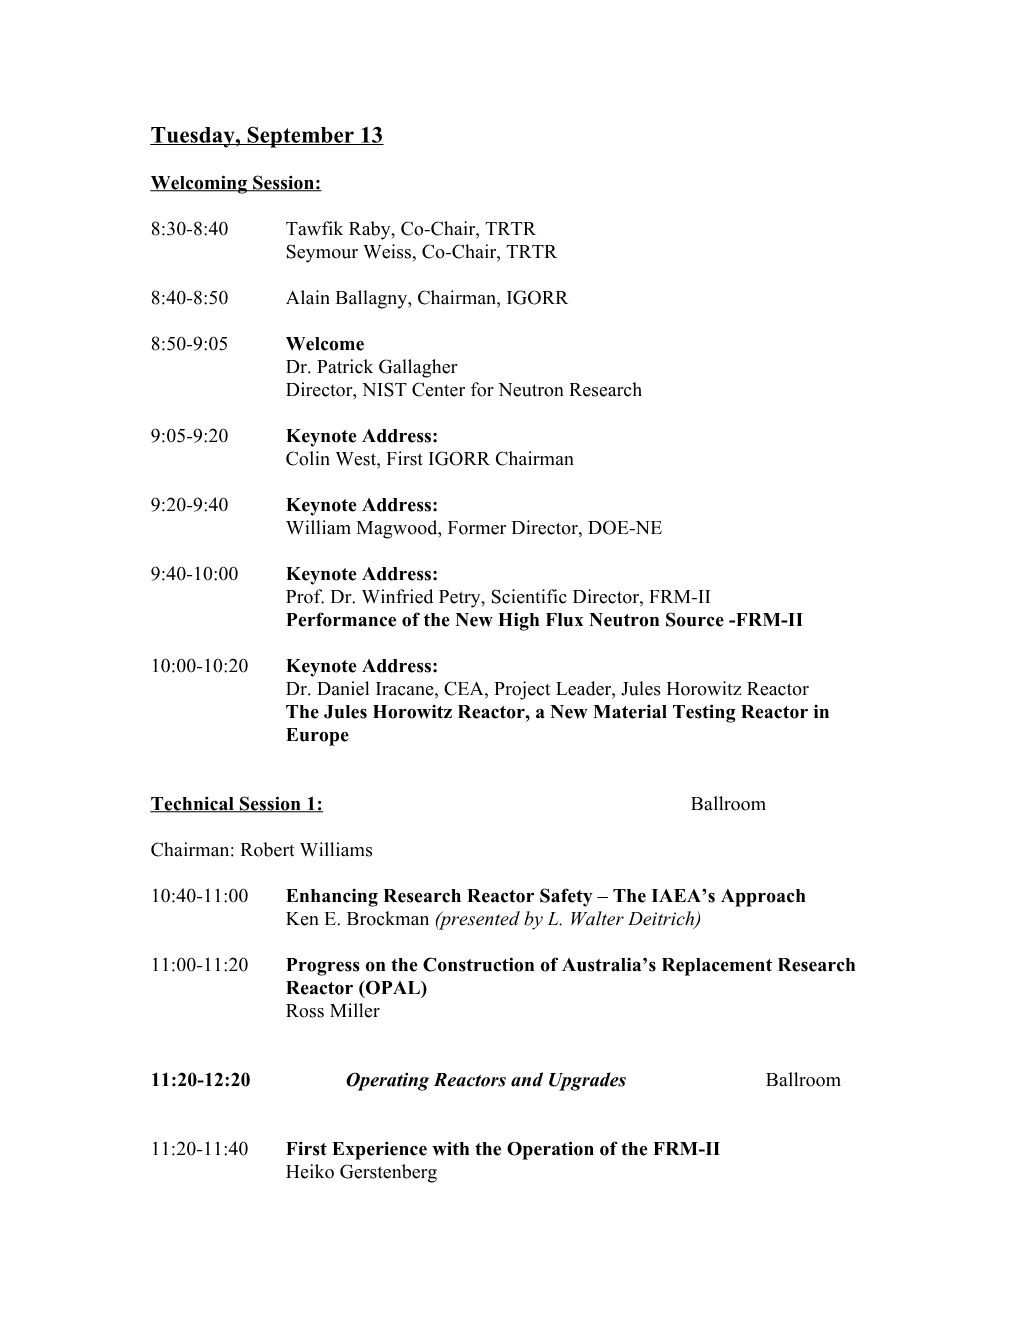 TRTR IGORR 2005 Schedule of Speakers.Pdf